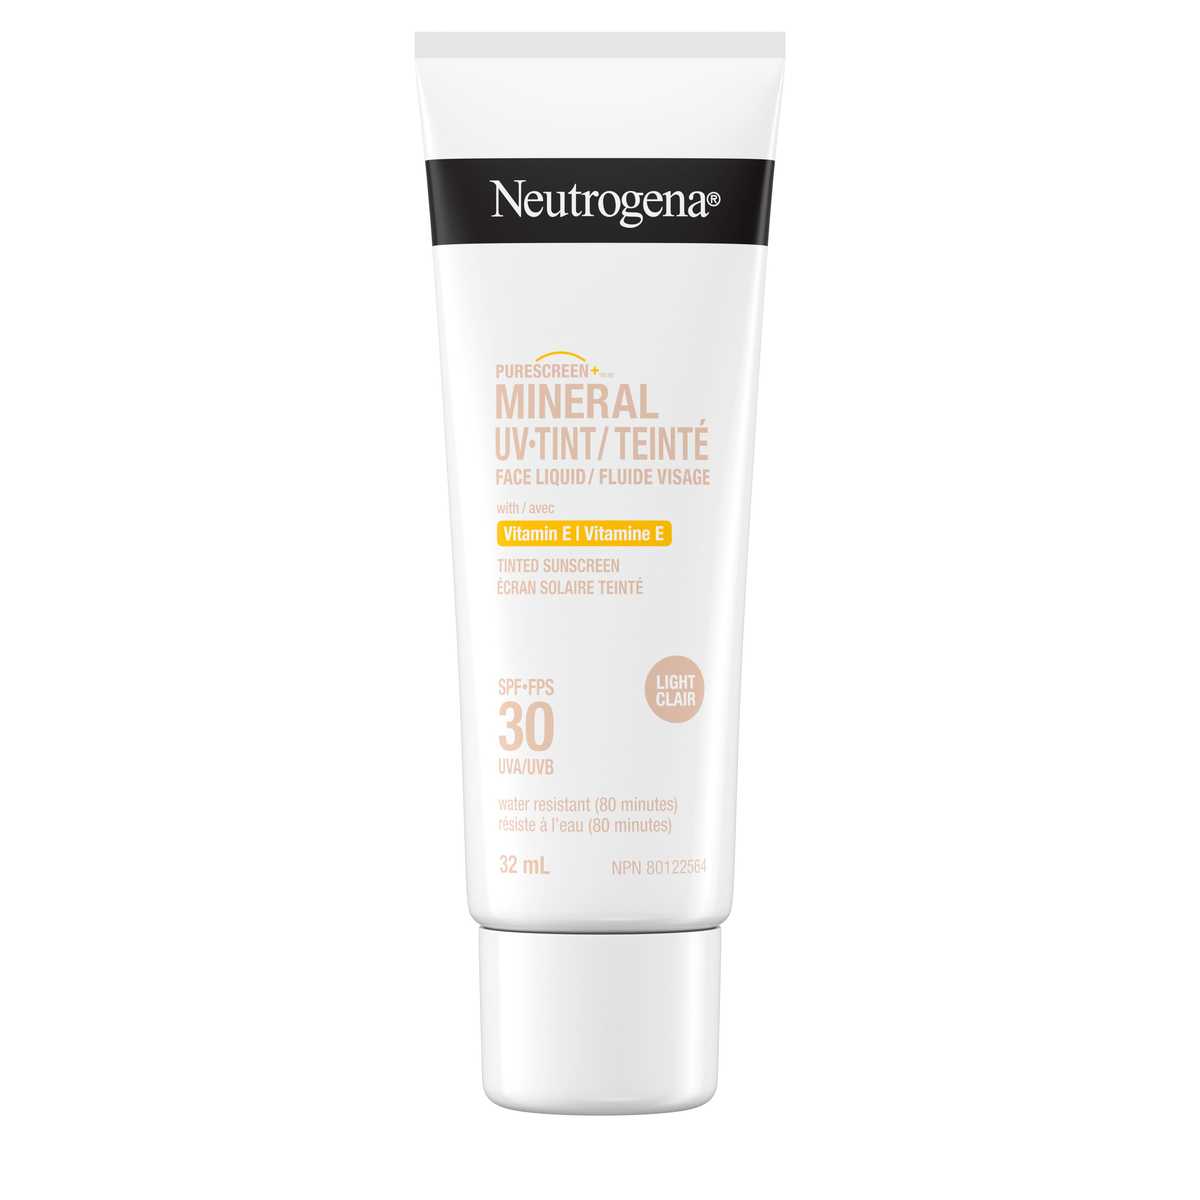 Front shot of NEUTROGENA® Purescreen+™ Mineral UV Tint Face Liquid Sunscreen SPF 30, Light, 32 mL squeeze tube